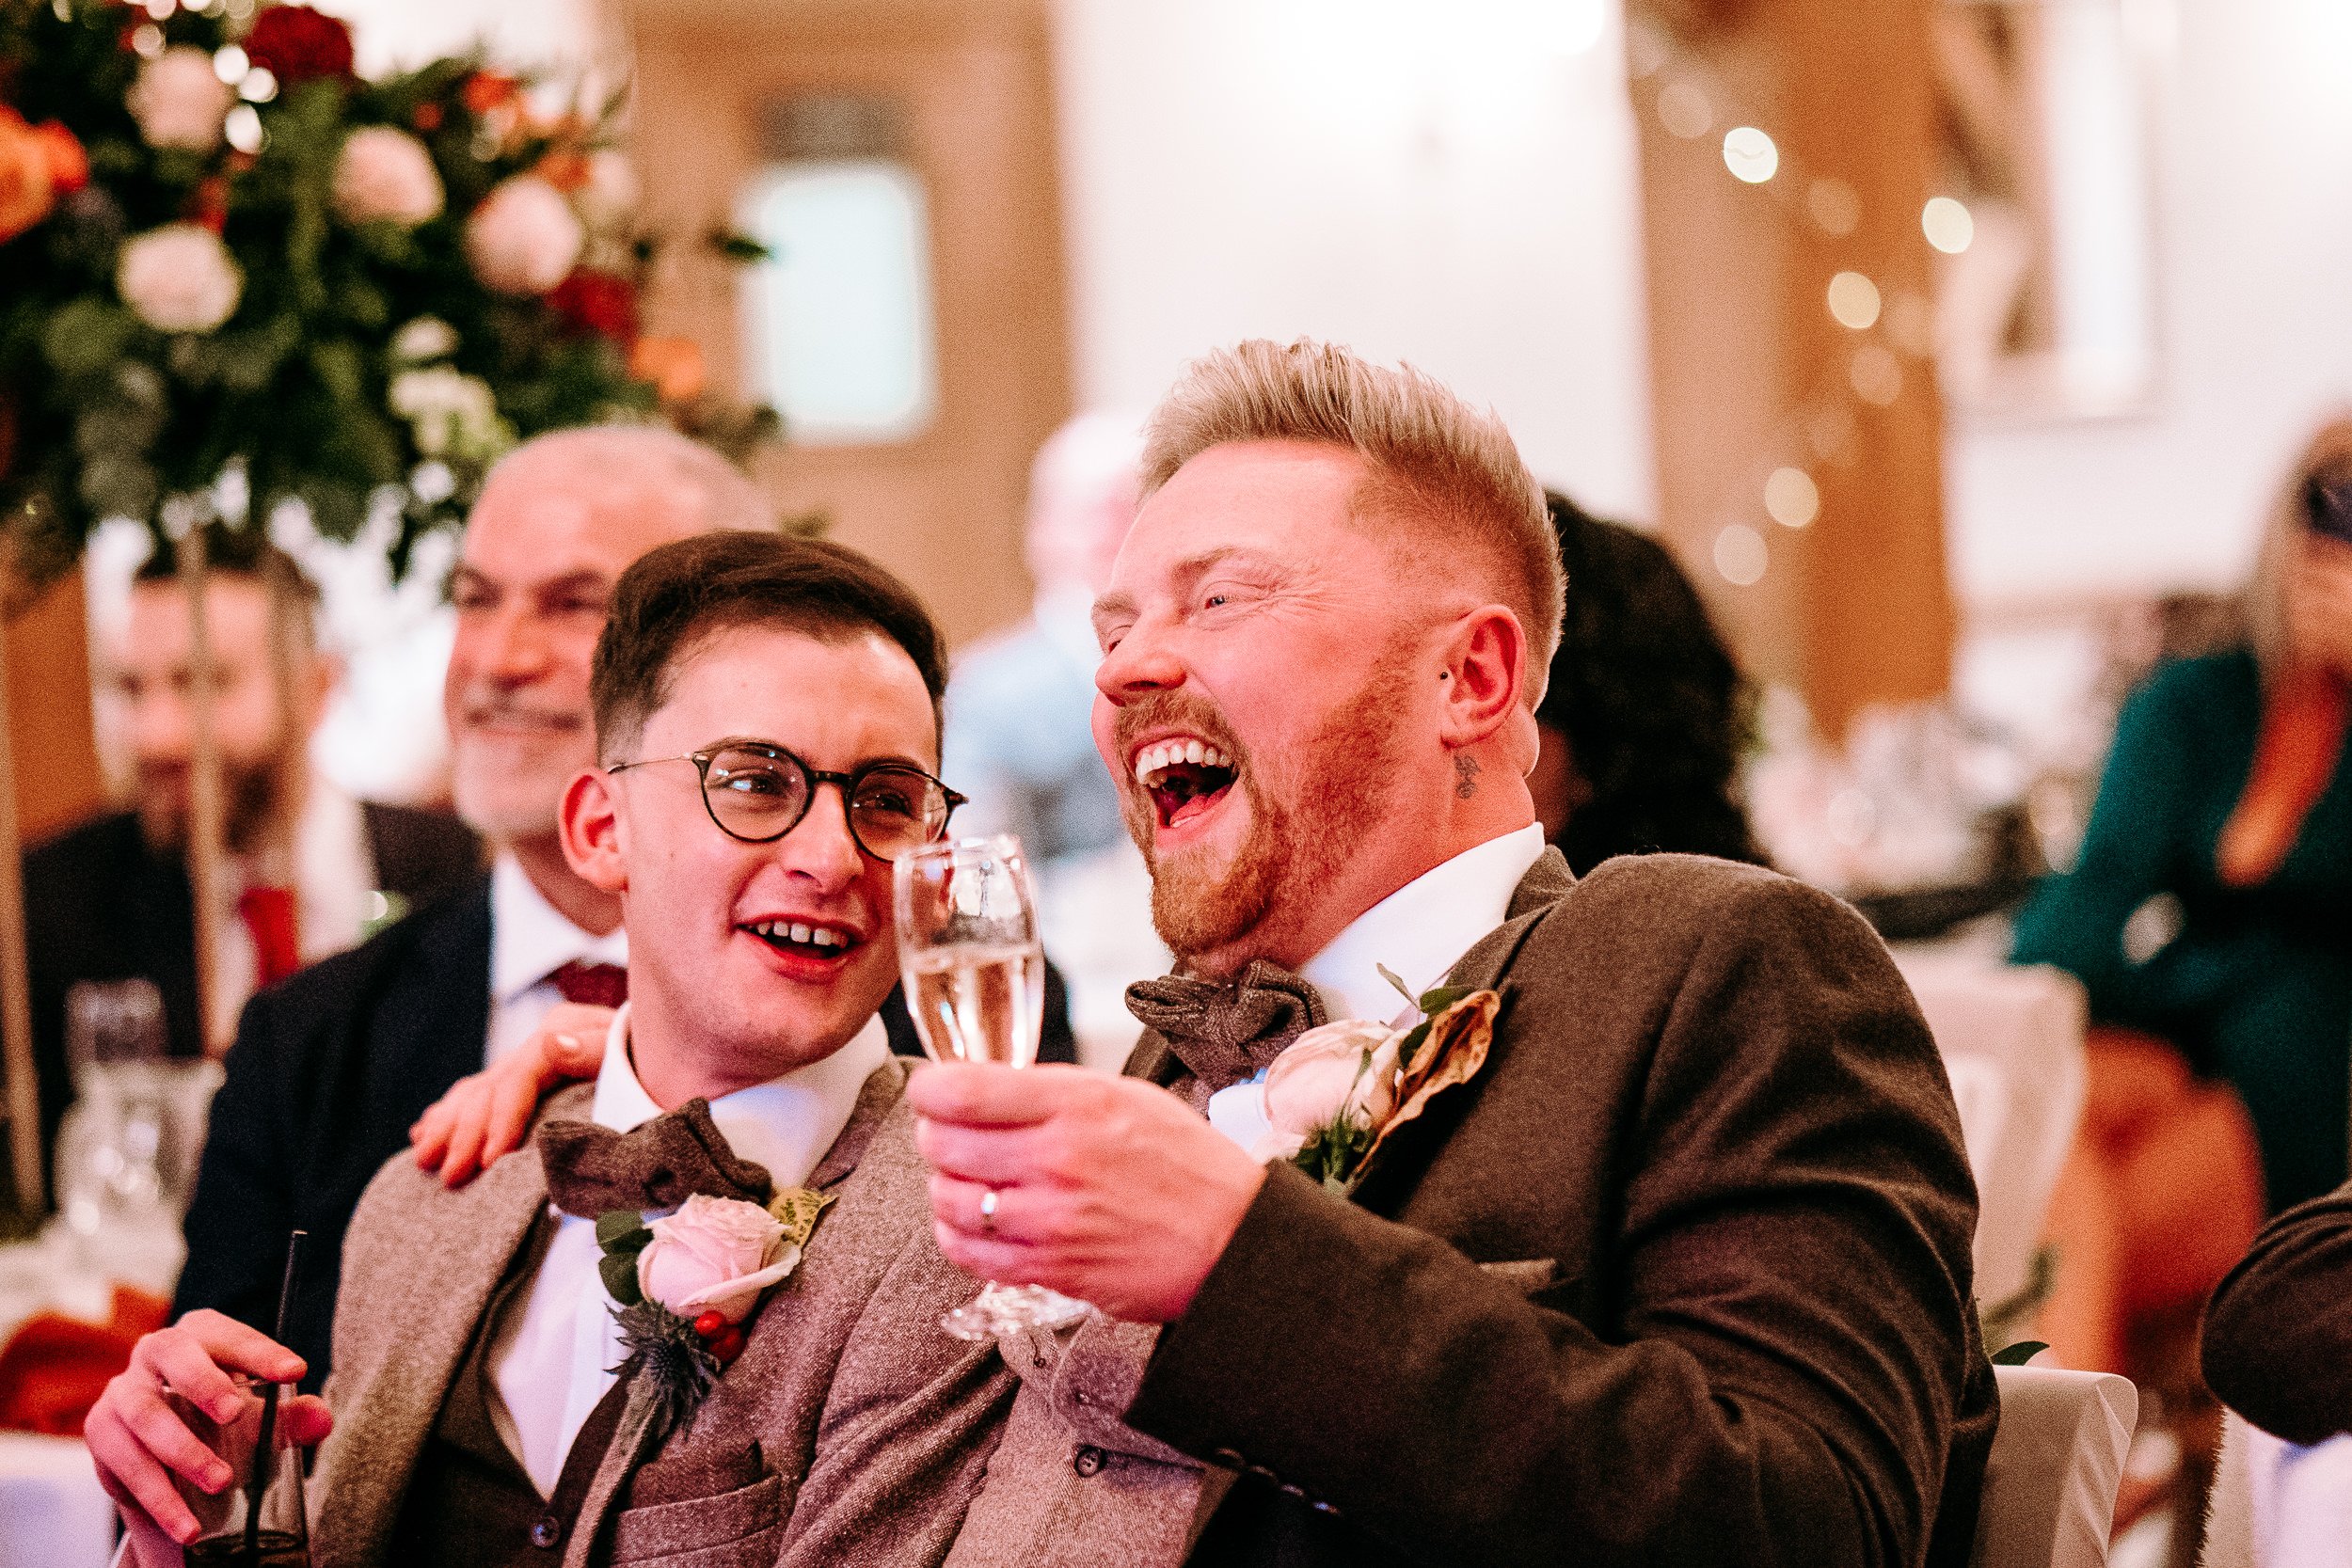  king arthur gower swansea relaxed fun gay wedding photography 